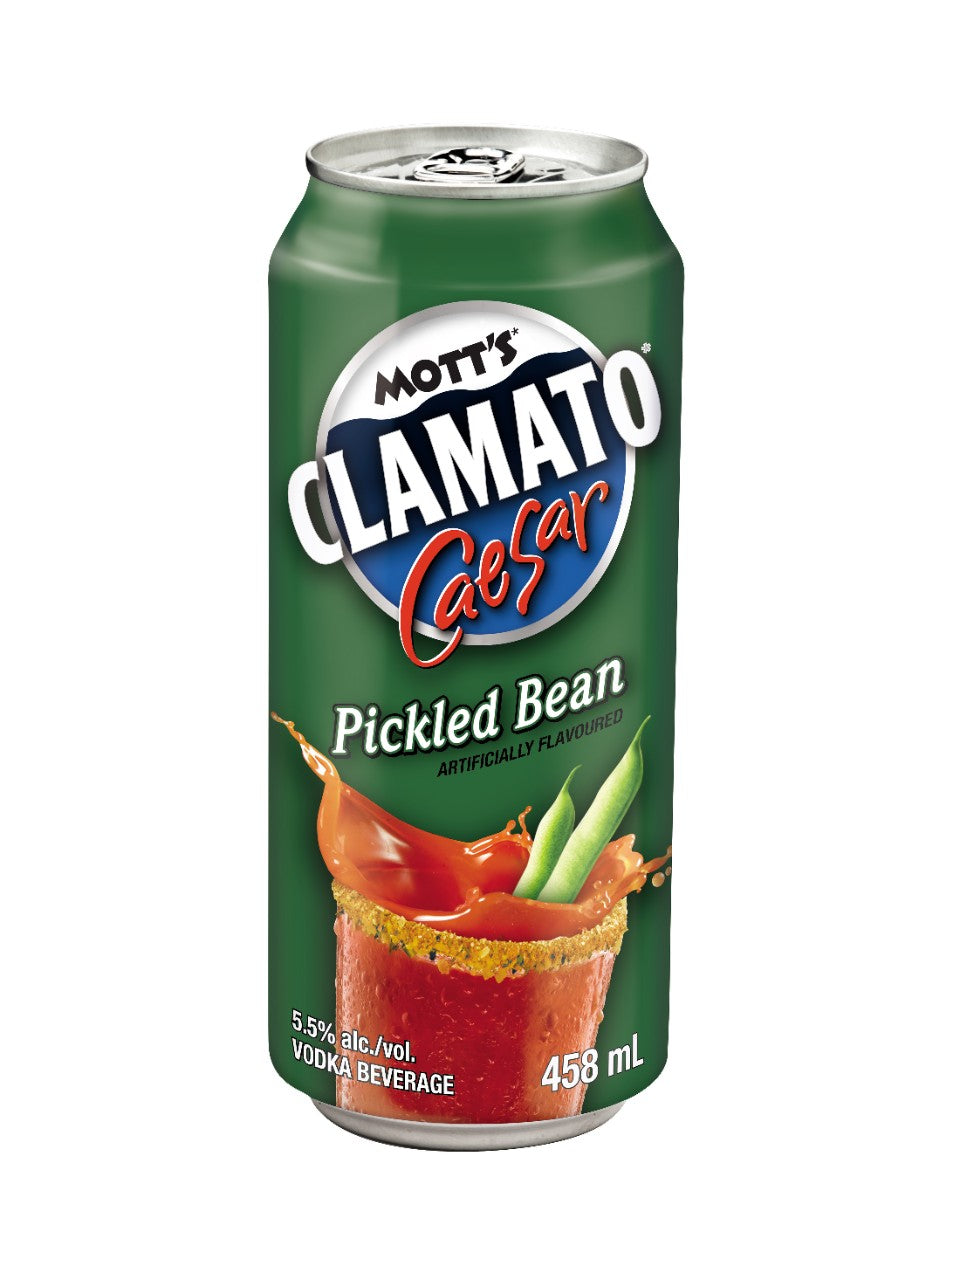 Motts Clamato  Pickled Caesar 458 mL can